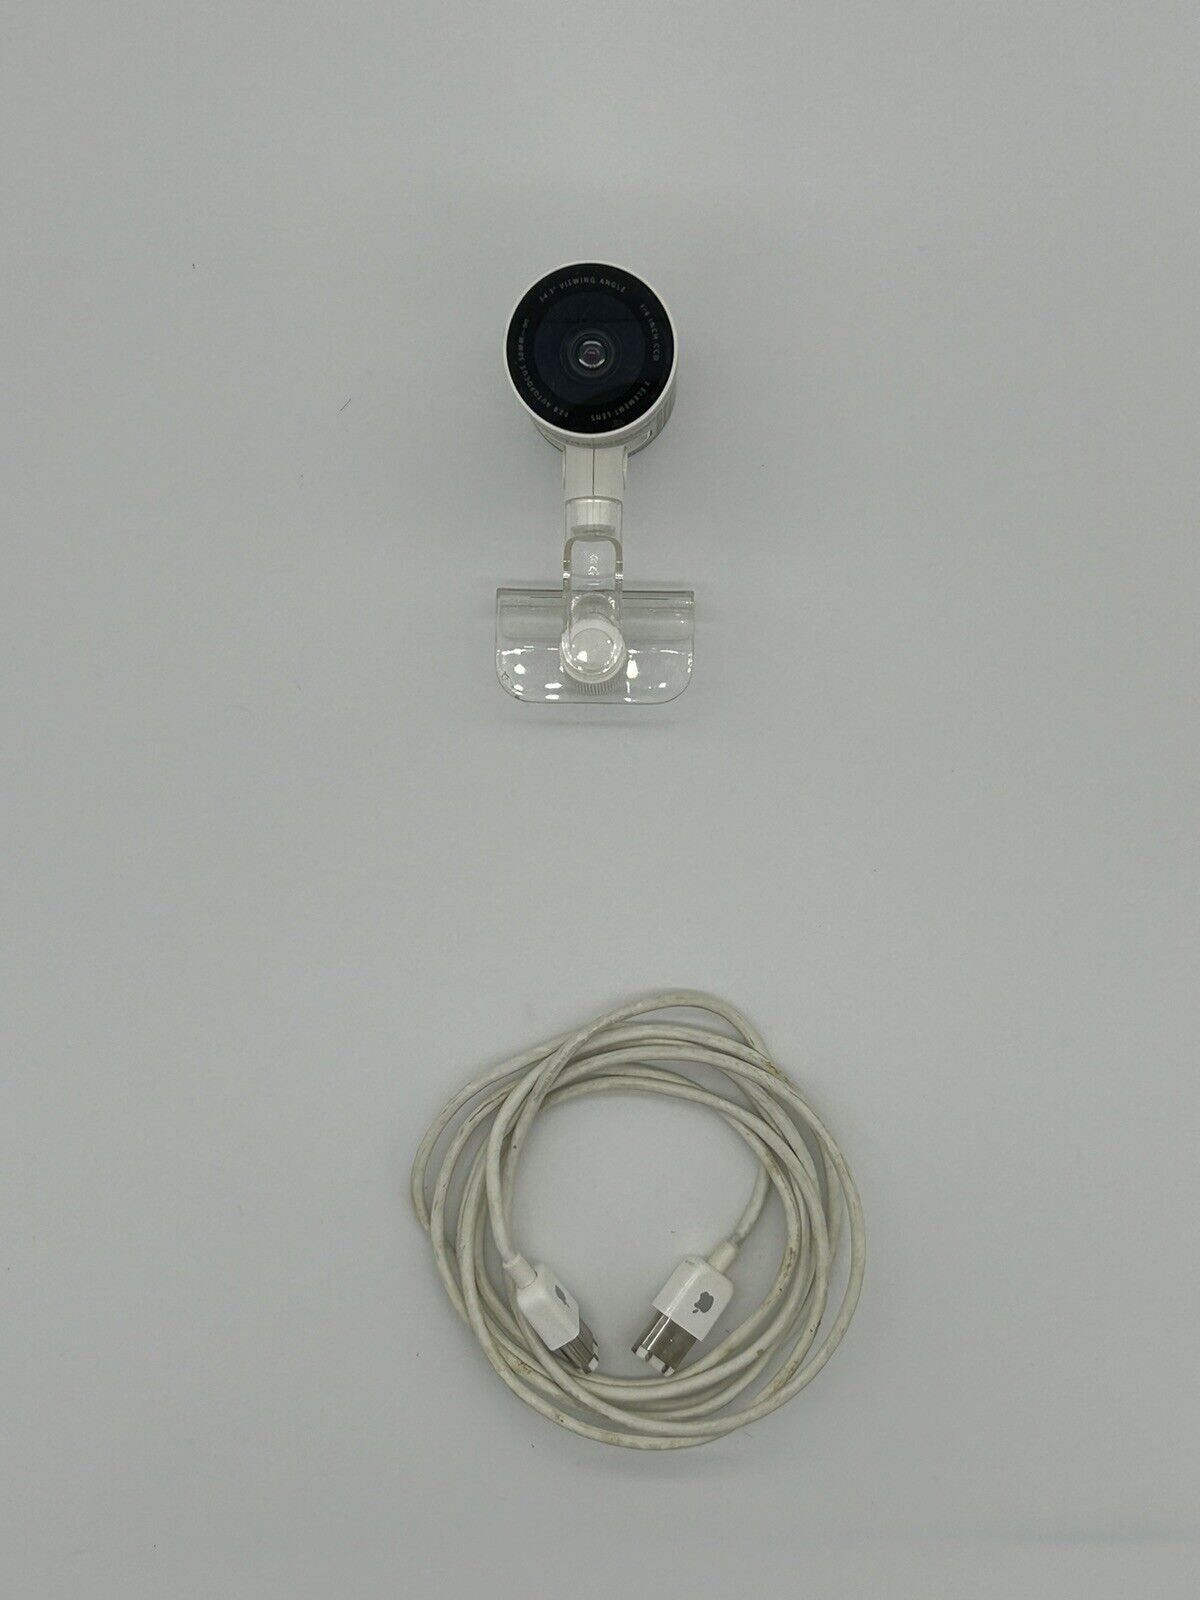 ORIGINAL Apple iSight Autofocus Video Camera & Microphone Firewire M8817LL A1023